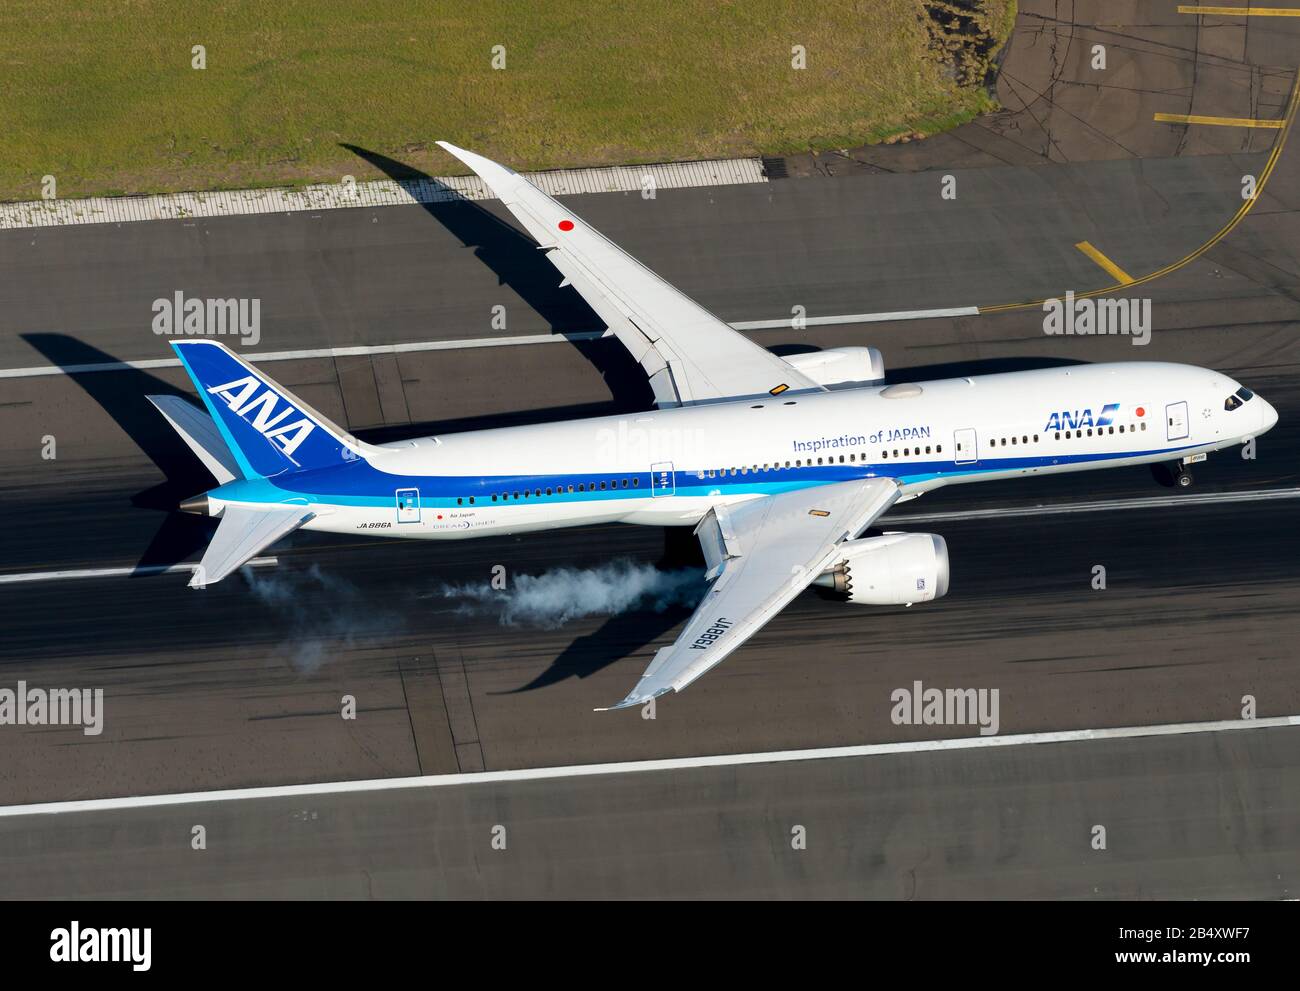 All Nippon Airways (ANA Japan) Boeing 787 Dreamliner aircraft landing in Sydney, Australia inbound from Tokyo Haneda, Japan. 787-9 airplane JA886A. Stock Photo